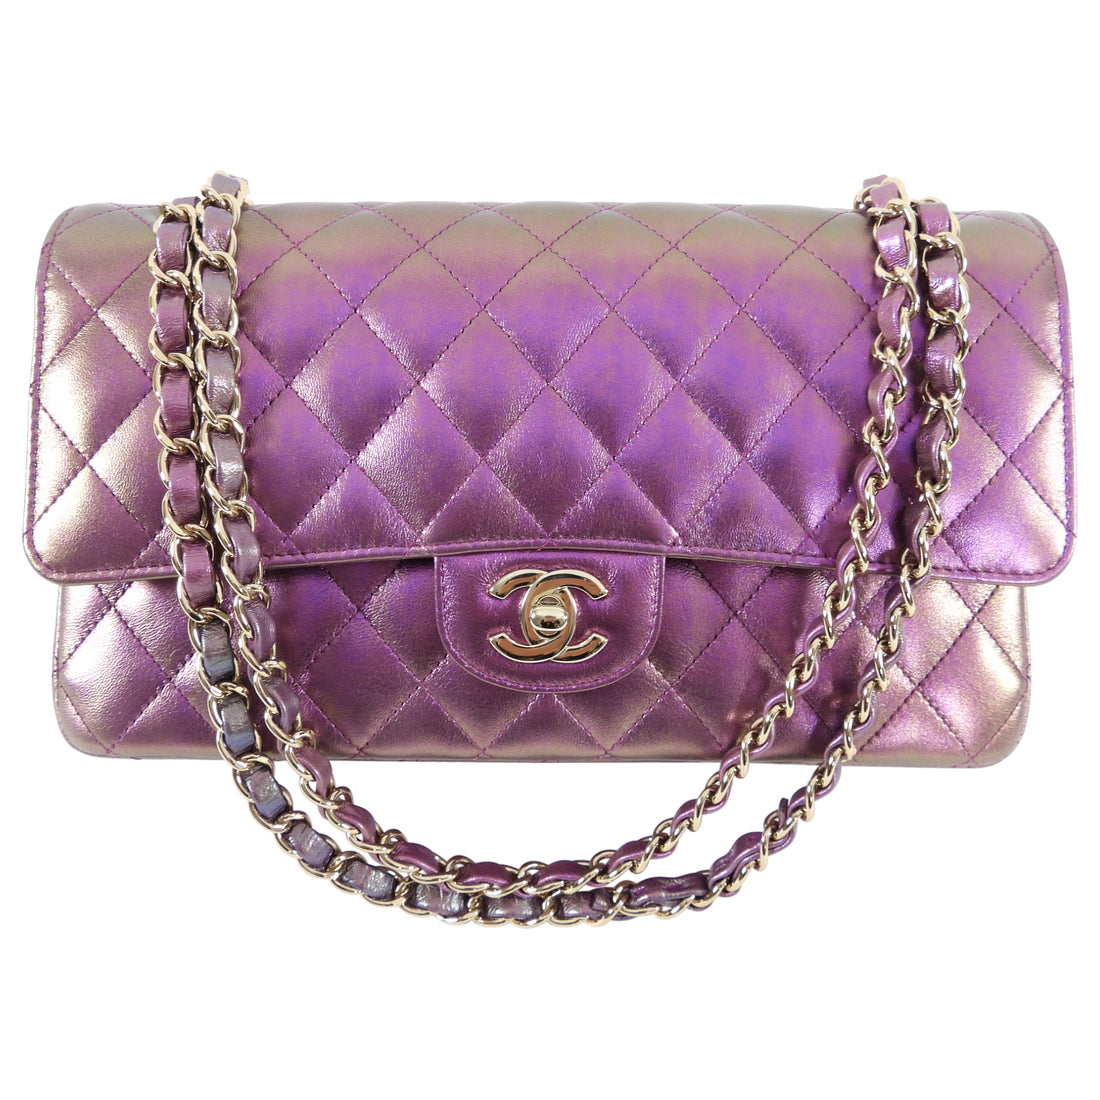 NWT 21K Authentic Chanel Iridescent Pink Unicorn WOC Wallet On Chain Handbag   eBay